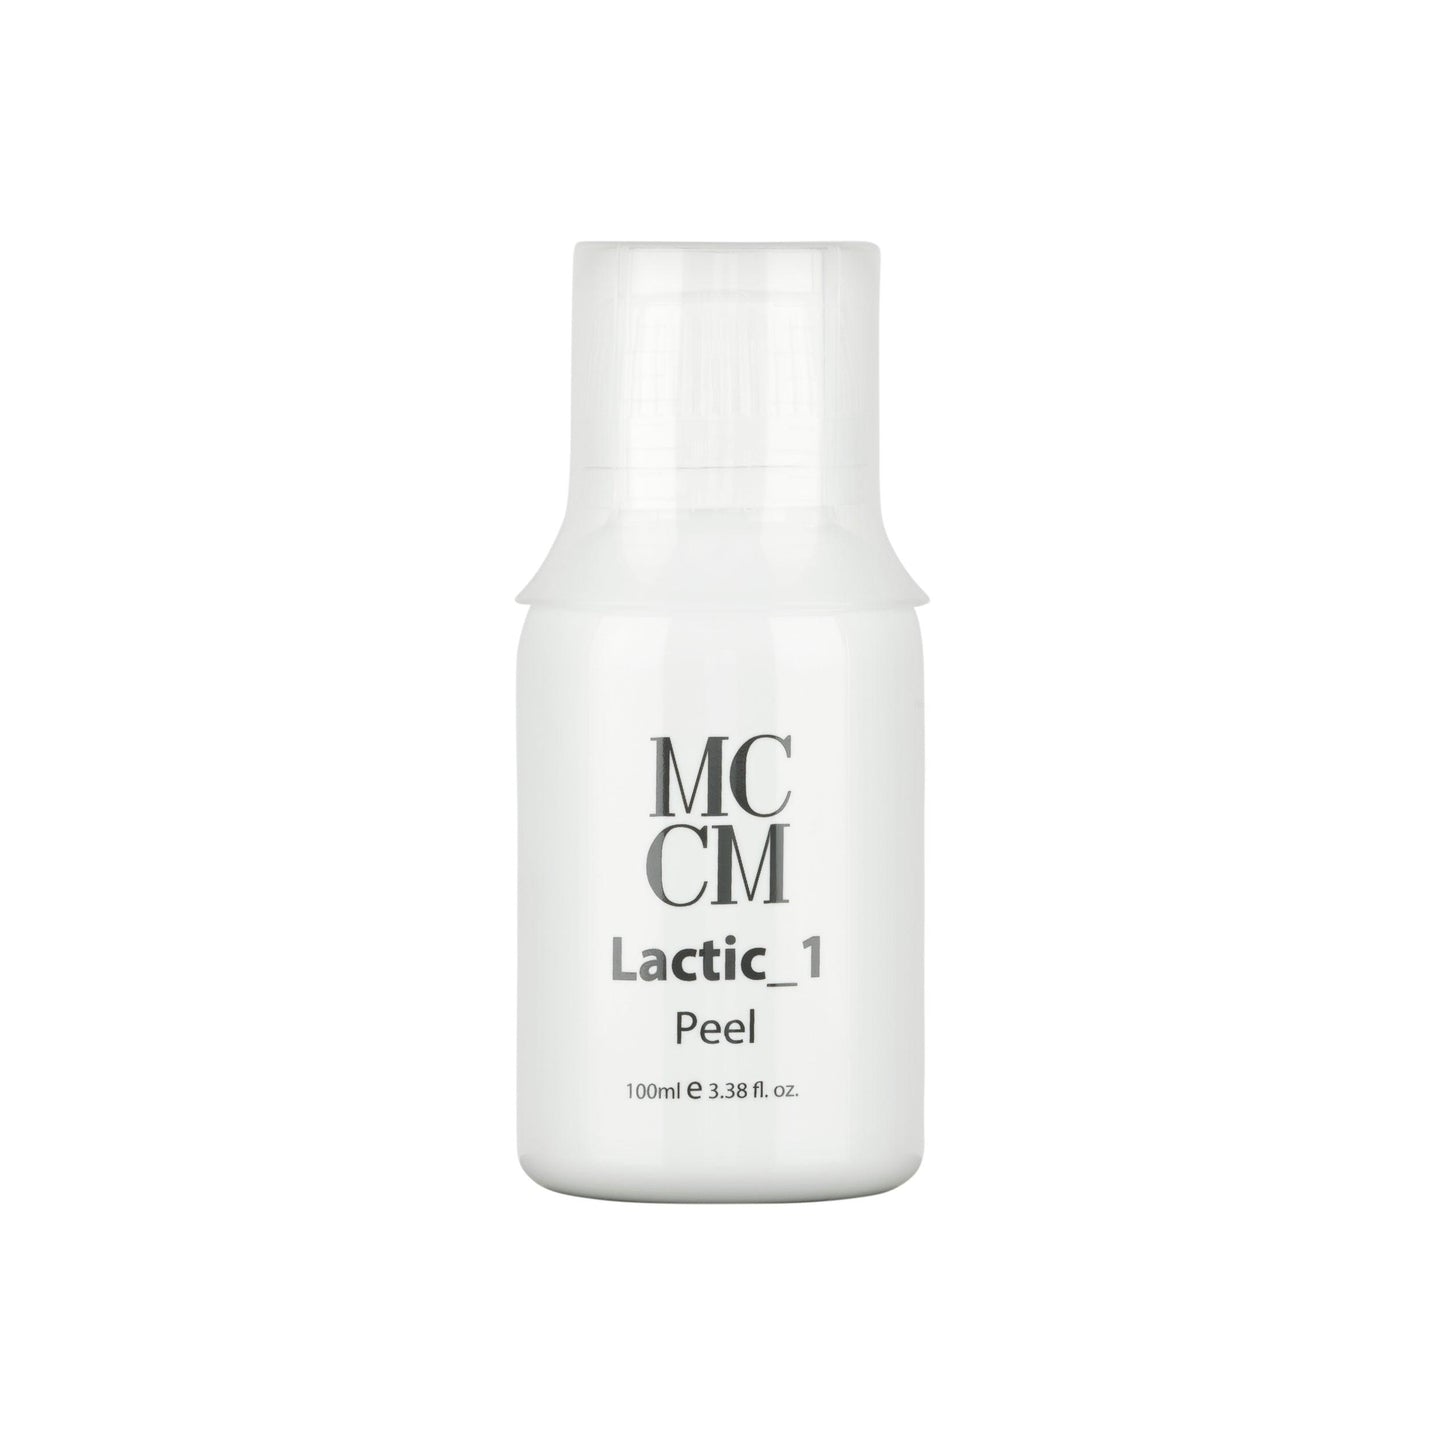 Lactic_1 Peel - MCCM Medical Cosmetics